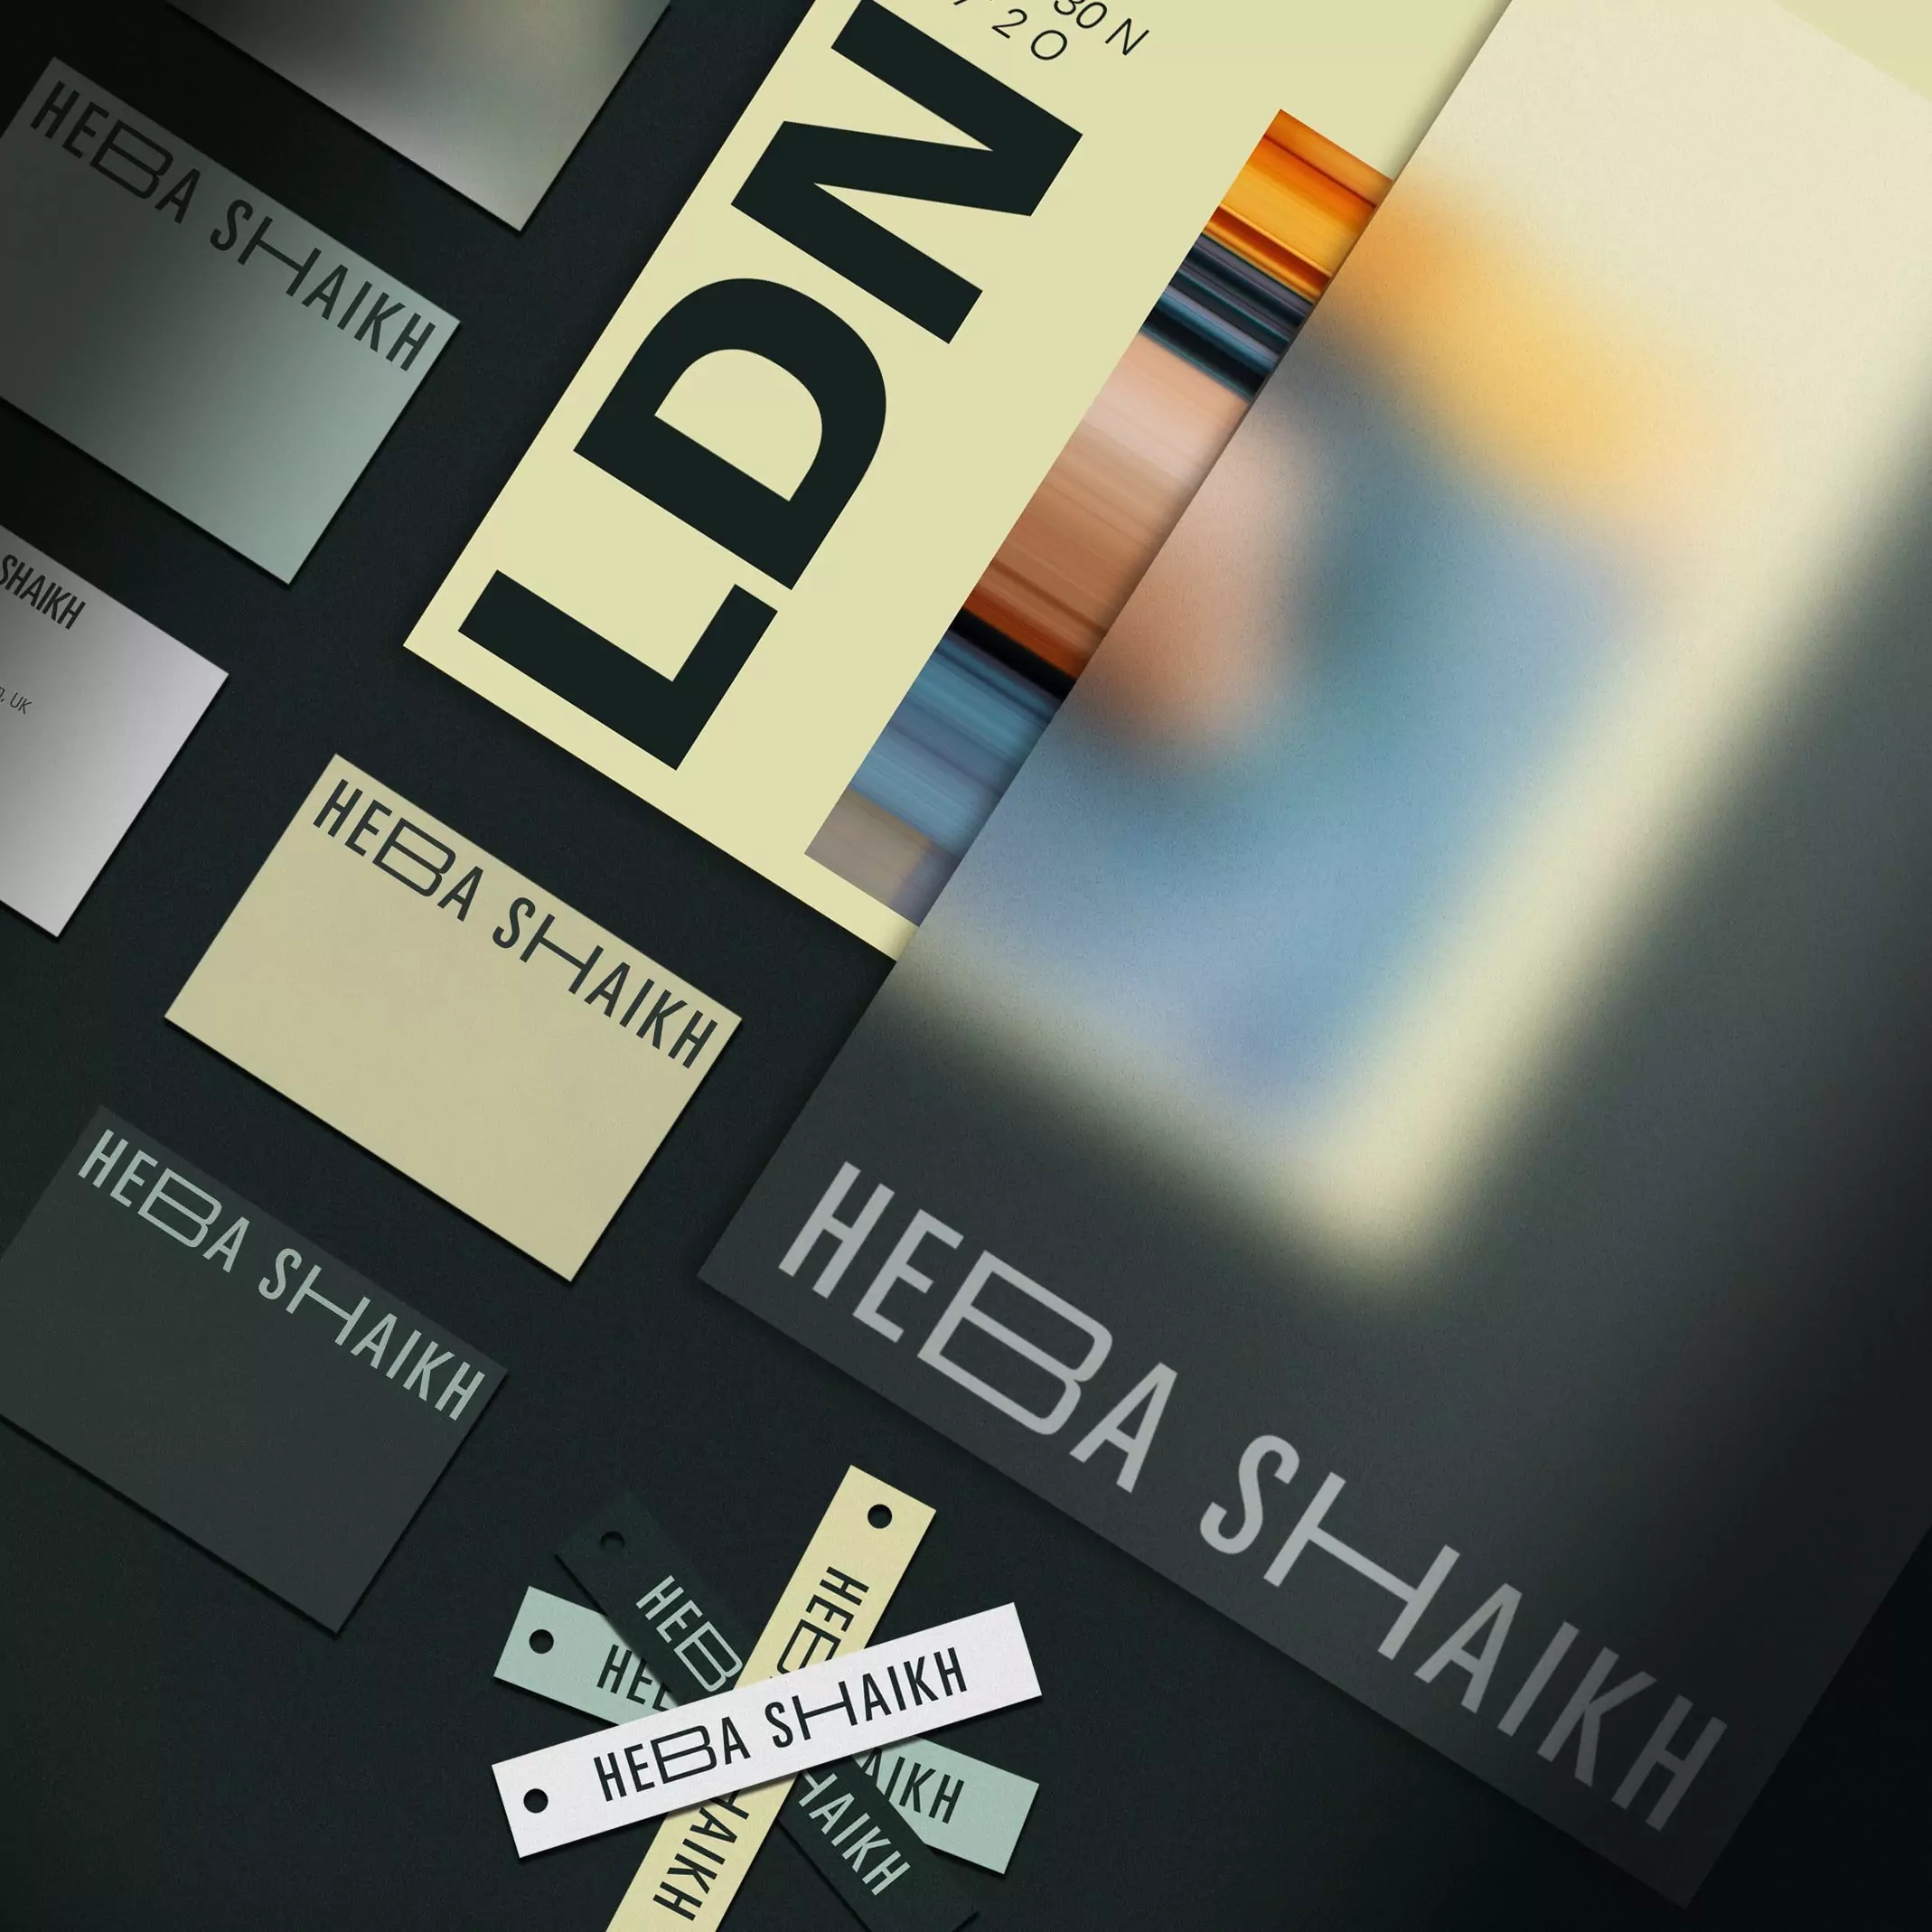 Heba Sheik Visual Identity - Corporate Stationery Design